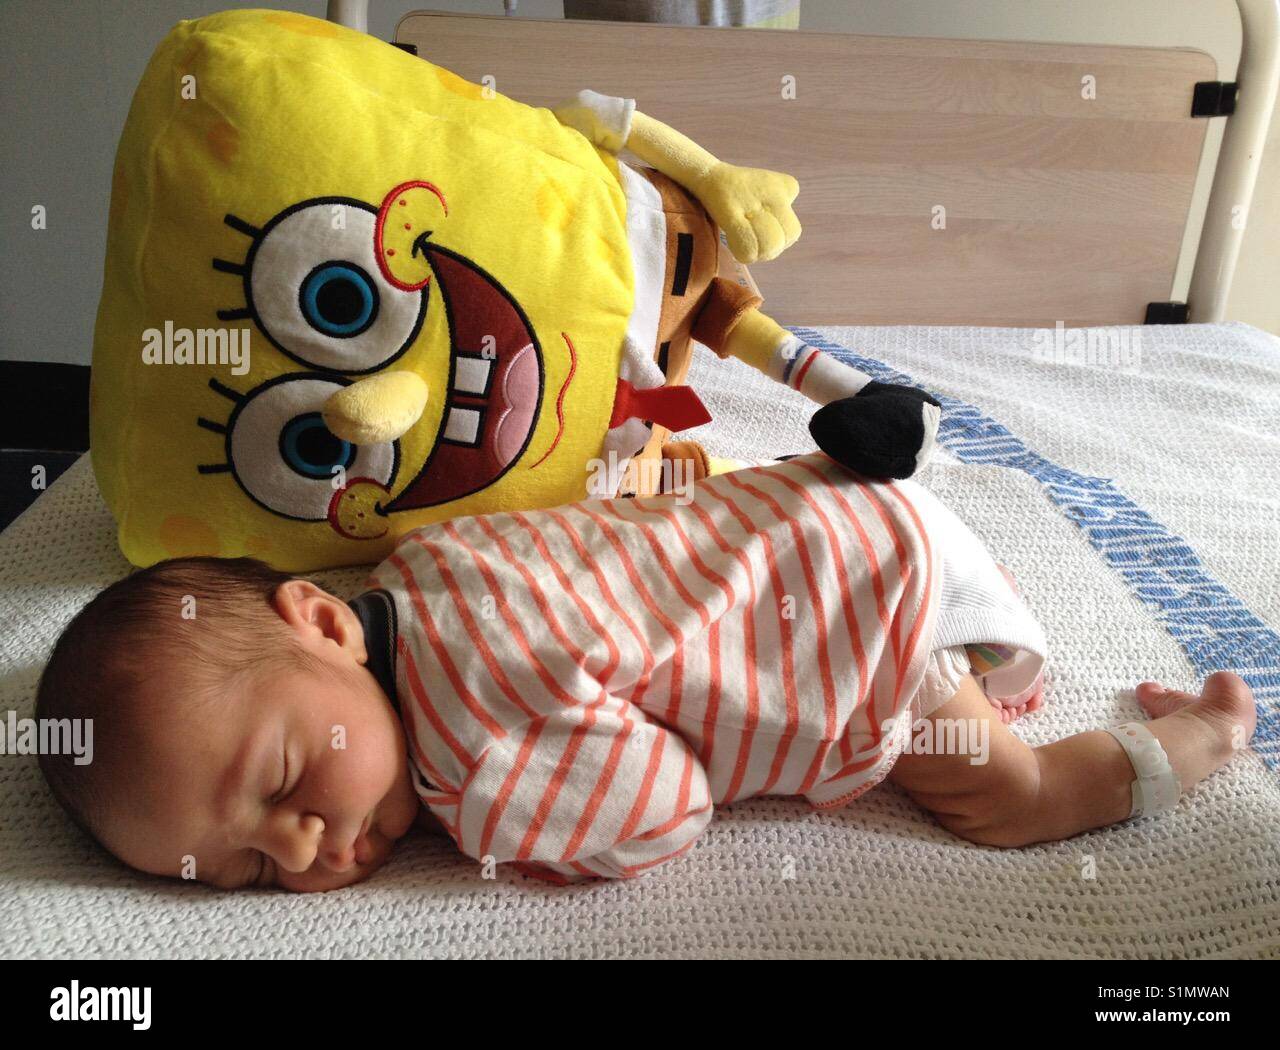 Sleeping new born baby with Sponge Bob Square Pants Stock Photo - Alamy